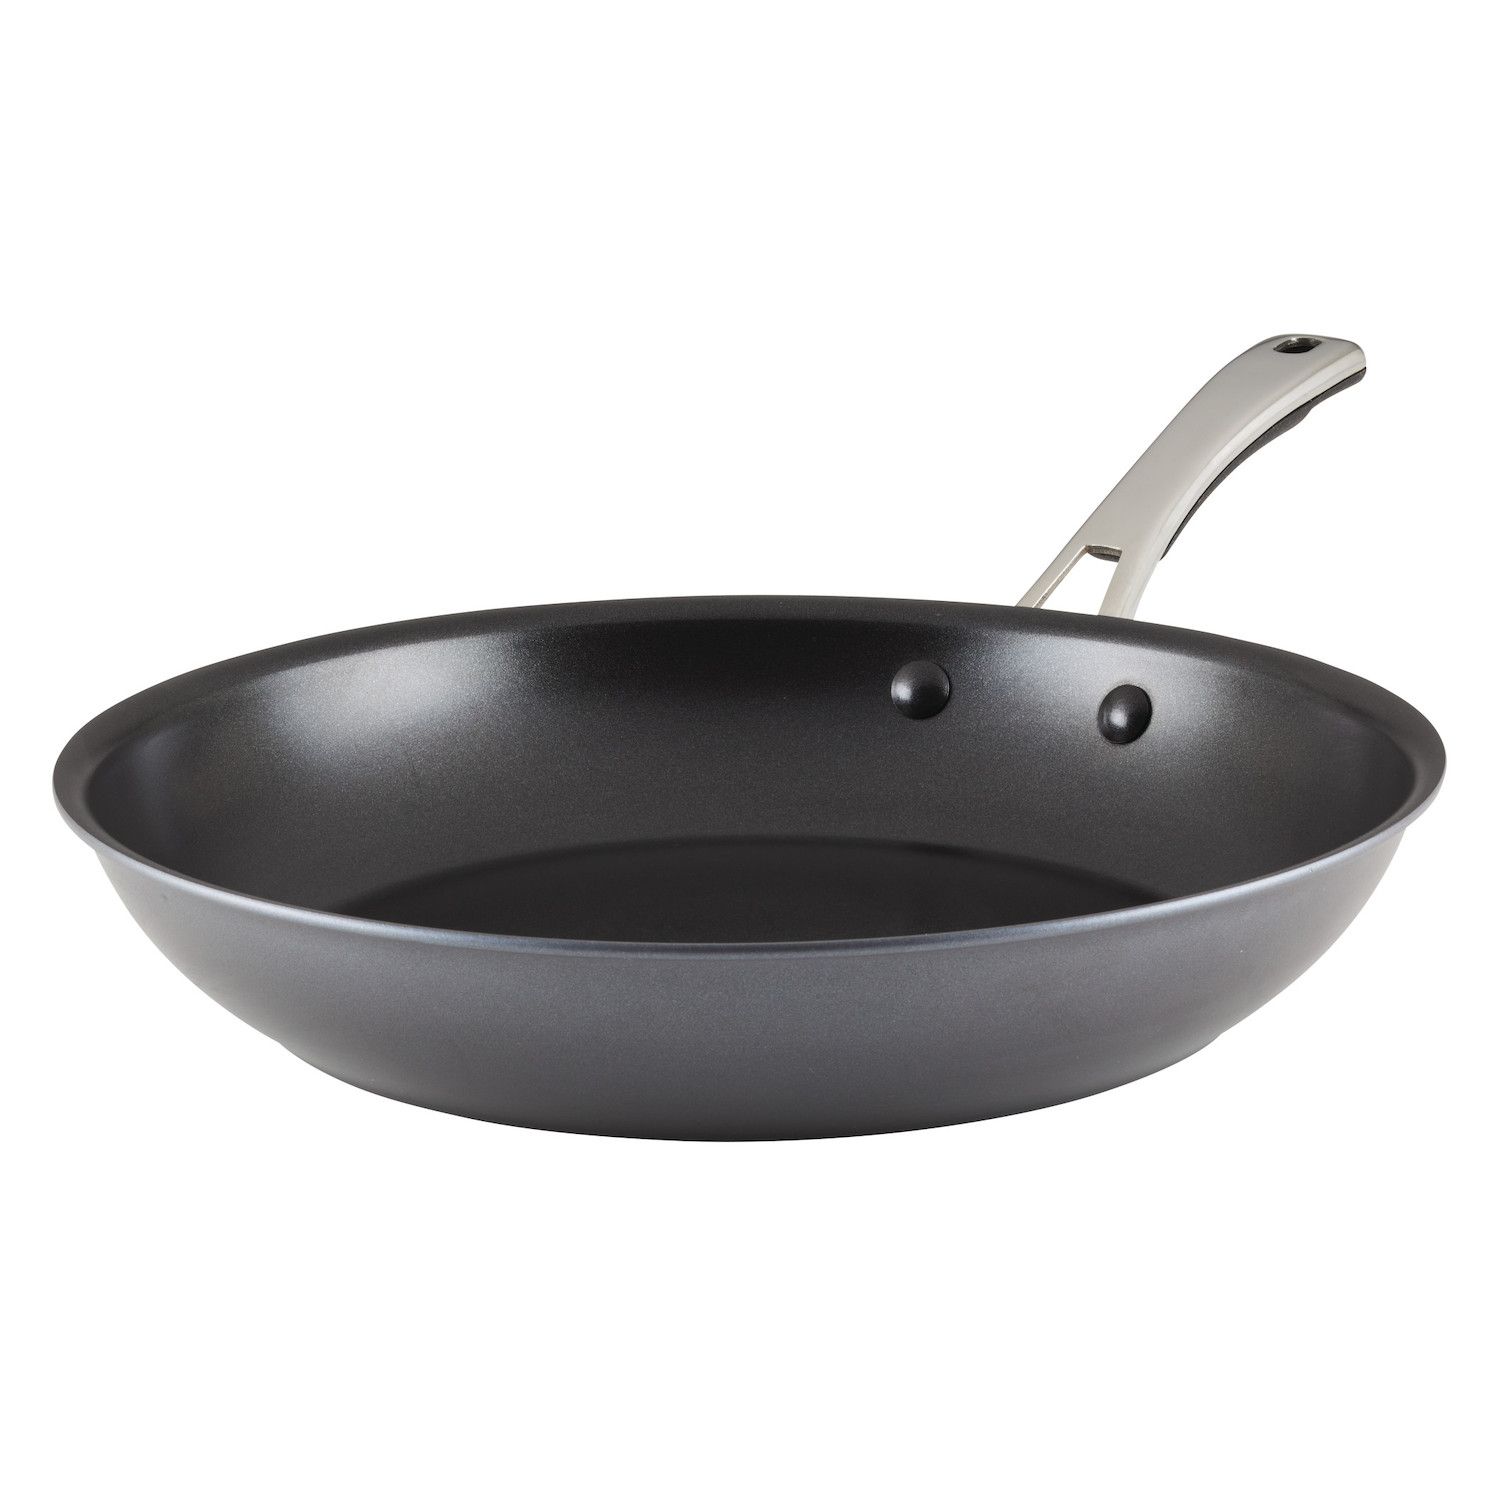 Kenmore Arlington 12 inch Nonstick Aluminum Frying Pan in Black Diamond